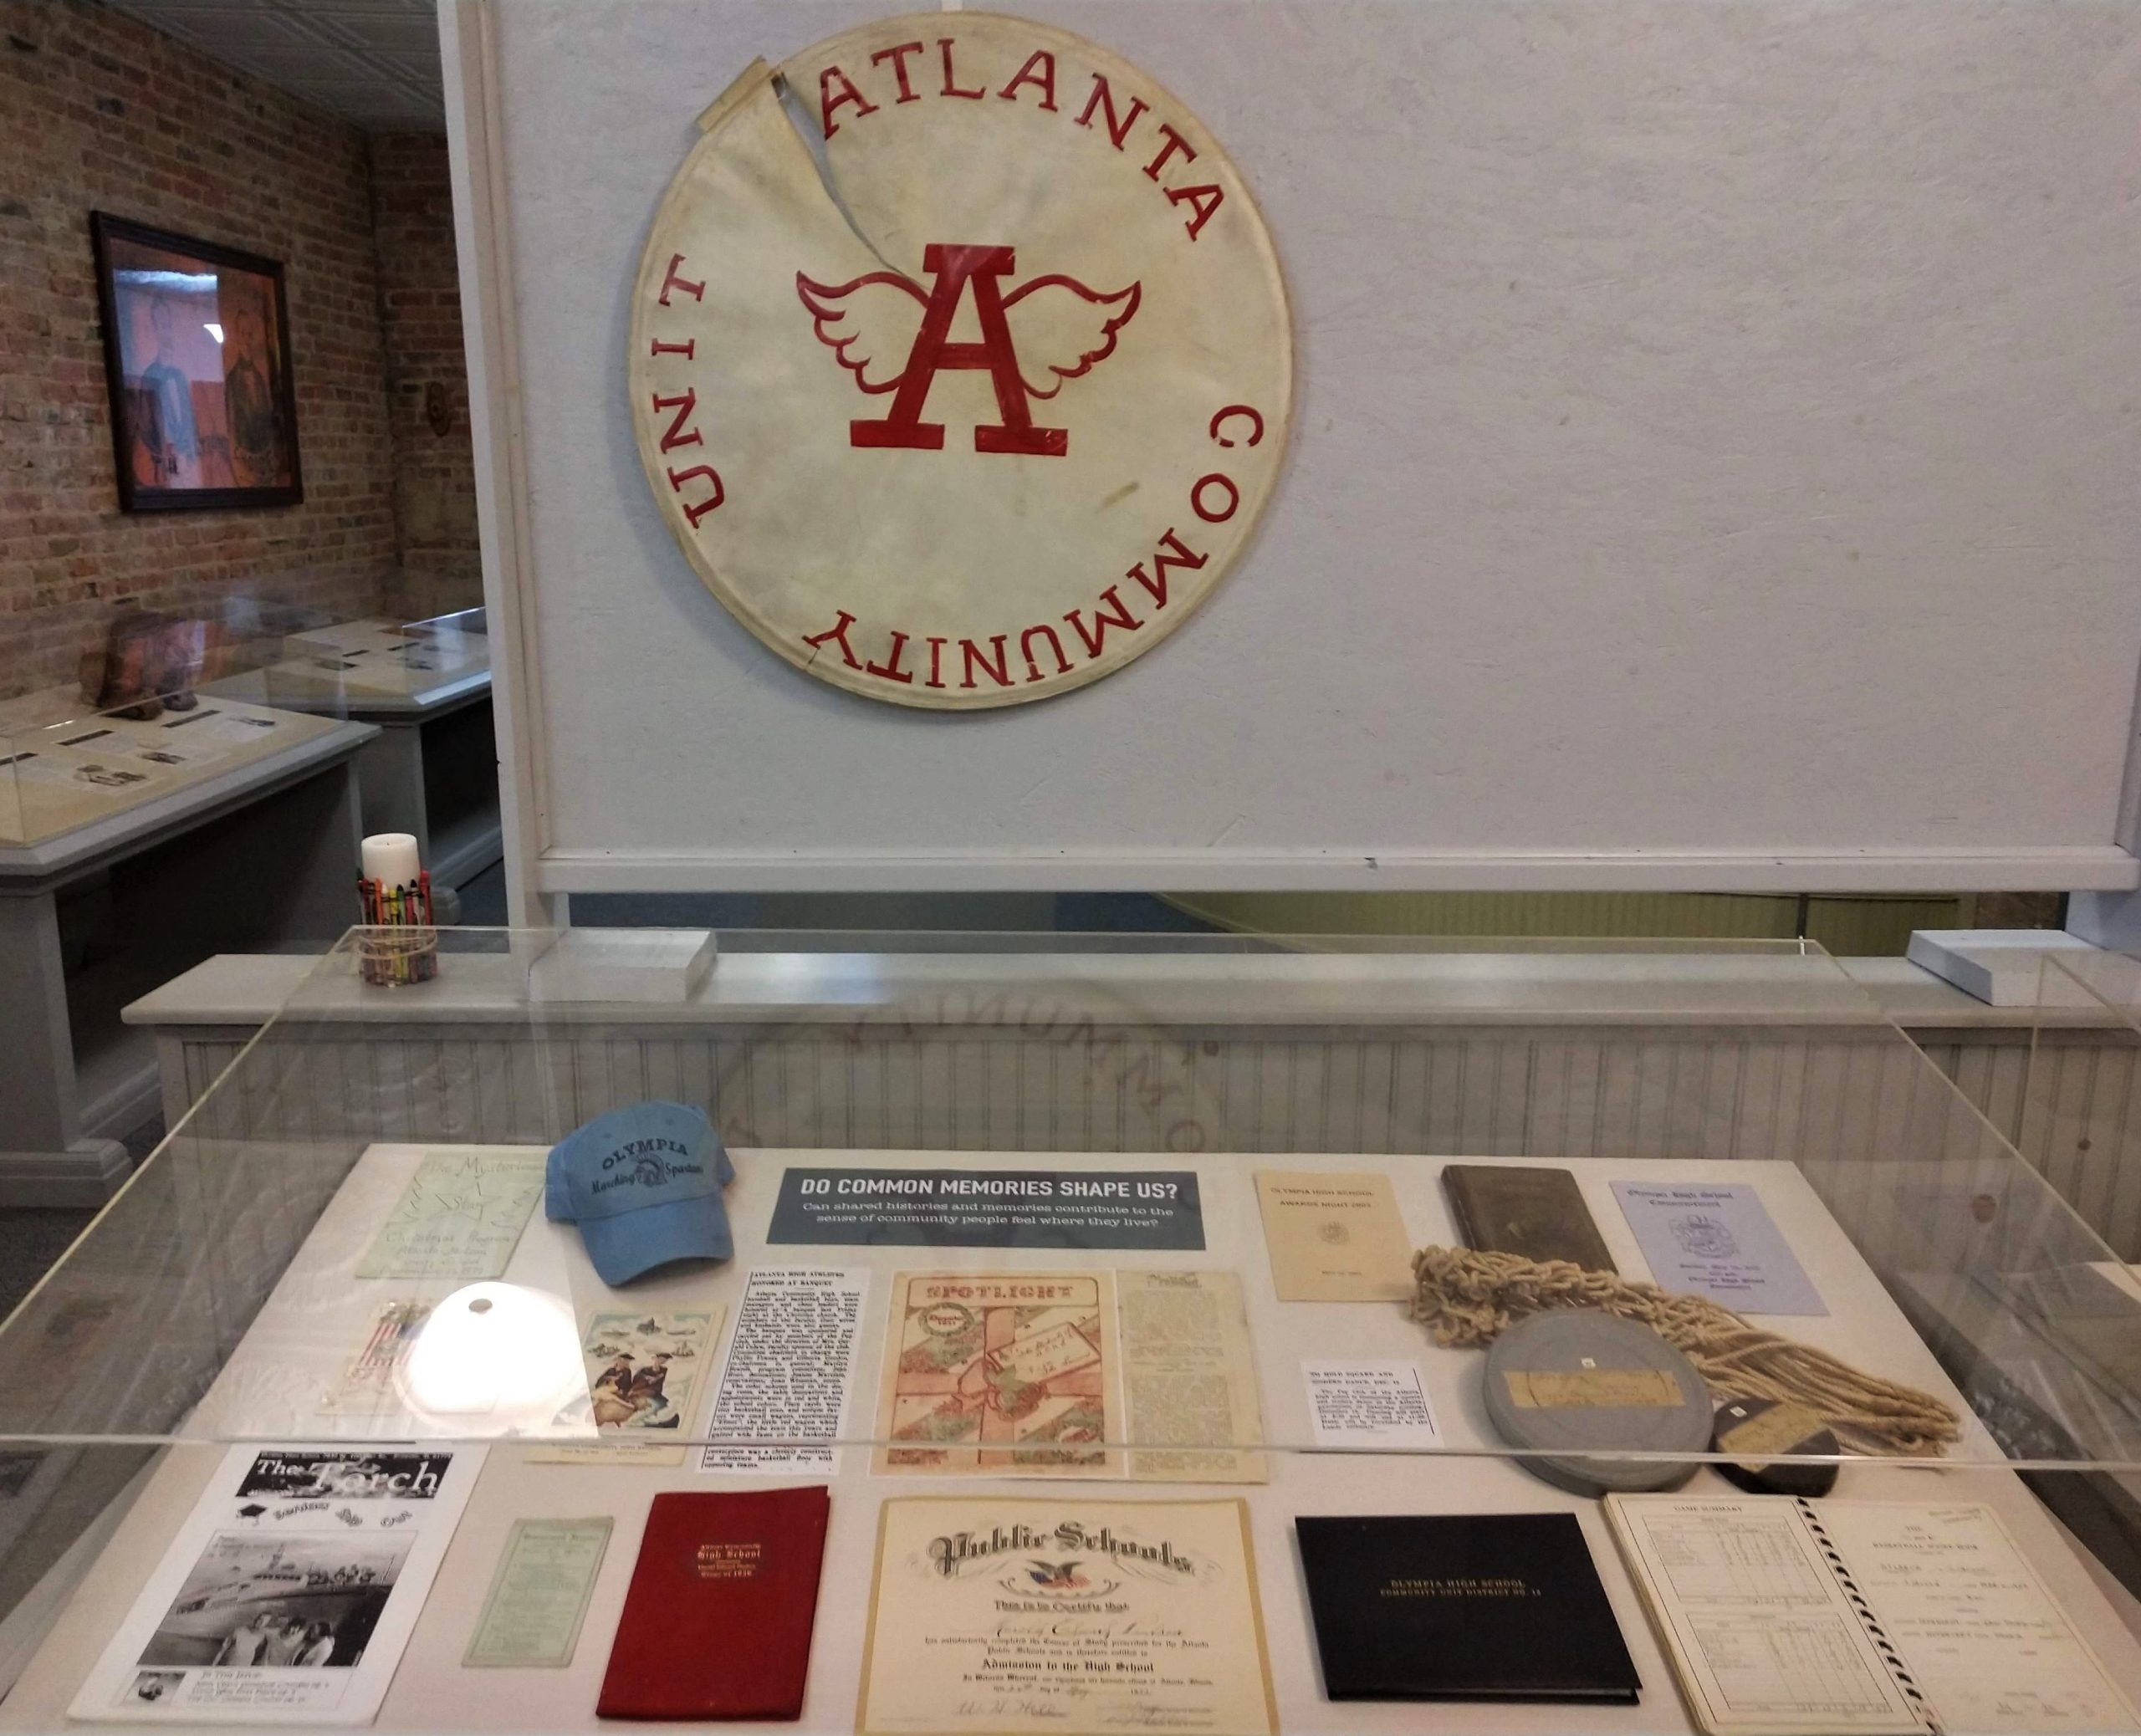 Photograph of a segment of Atlanta Museum's companion exhibition, "Classrooms & Community".